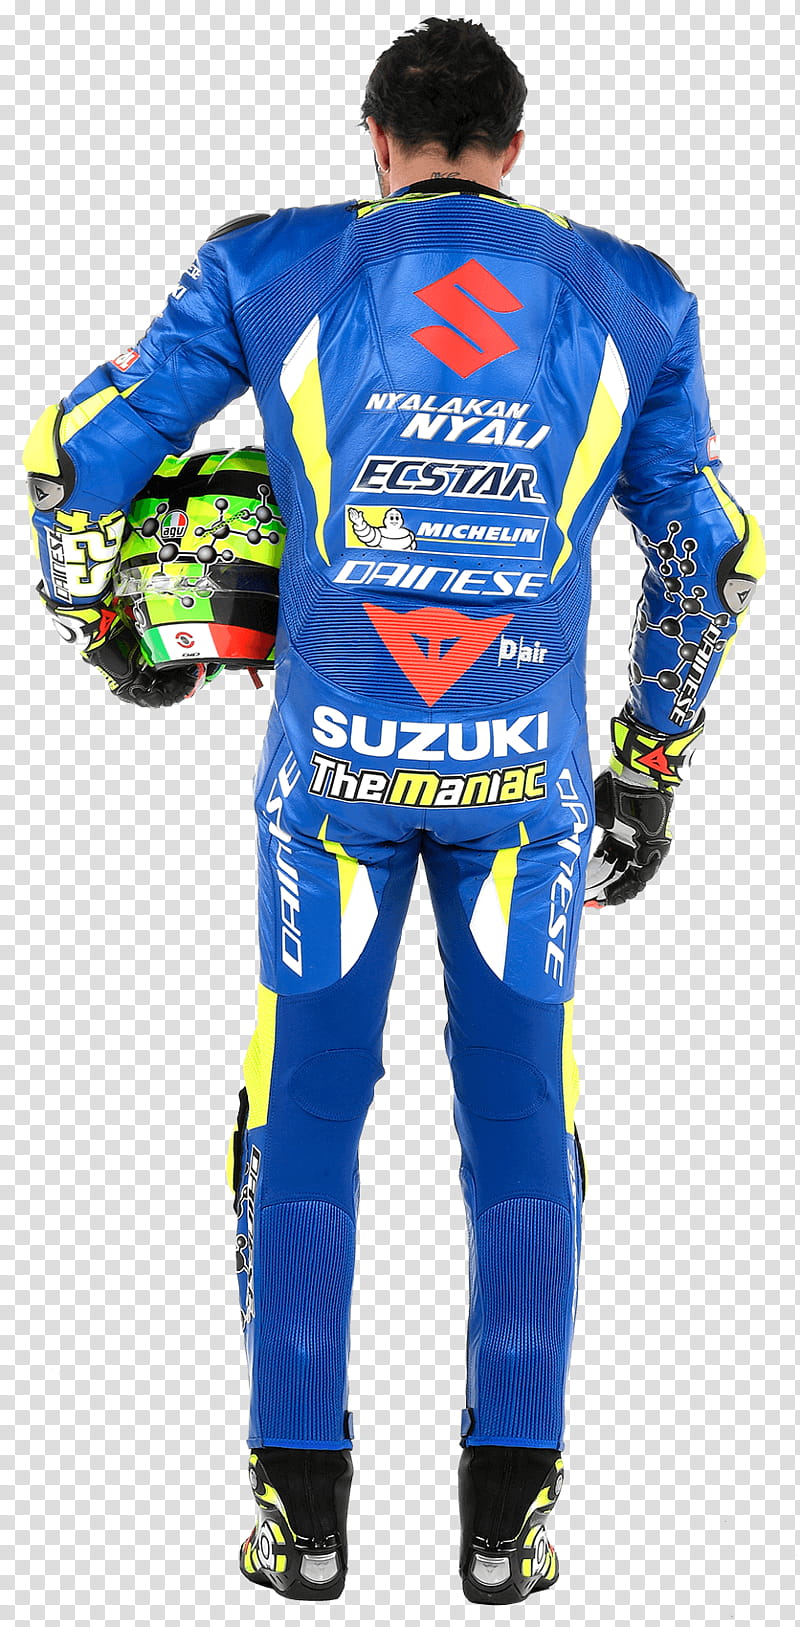 Team Suzuki Ecstar Clothing, Motogp, Jersey, Sports, 24 Hours Of Le Mans, Racing, Uniform, Sleeve transparent background PNG clipart